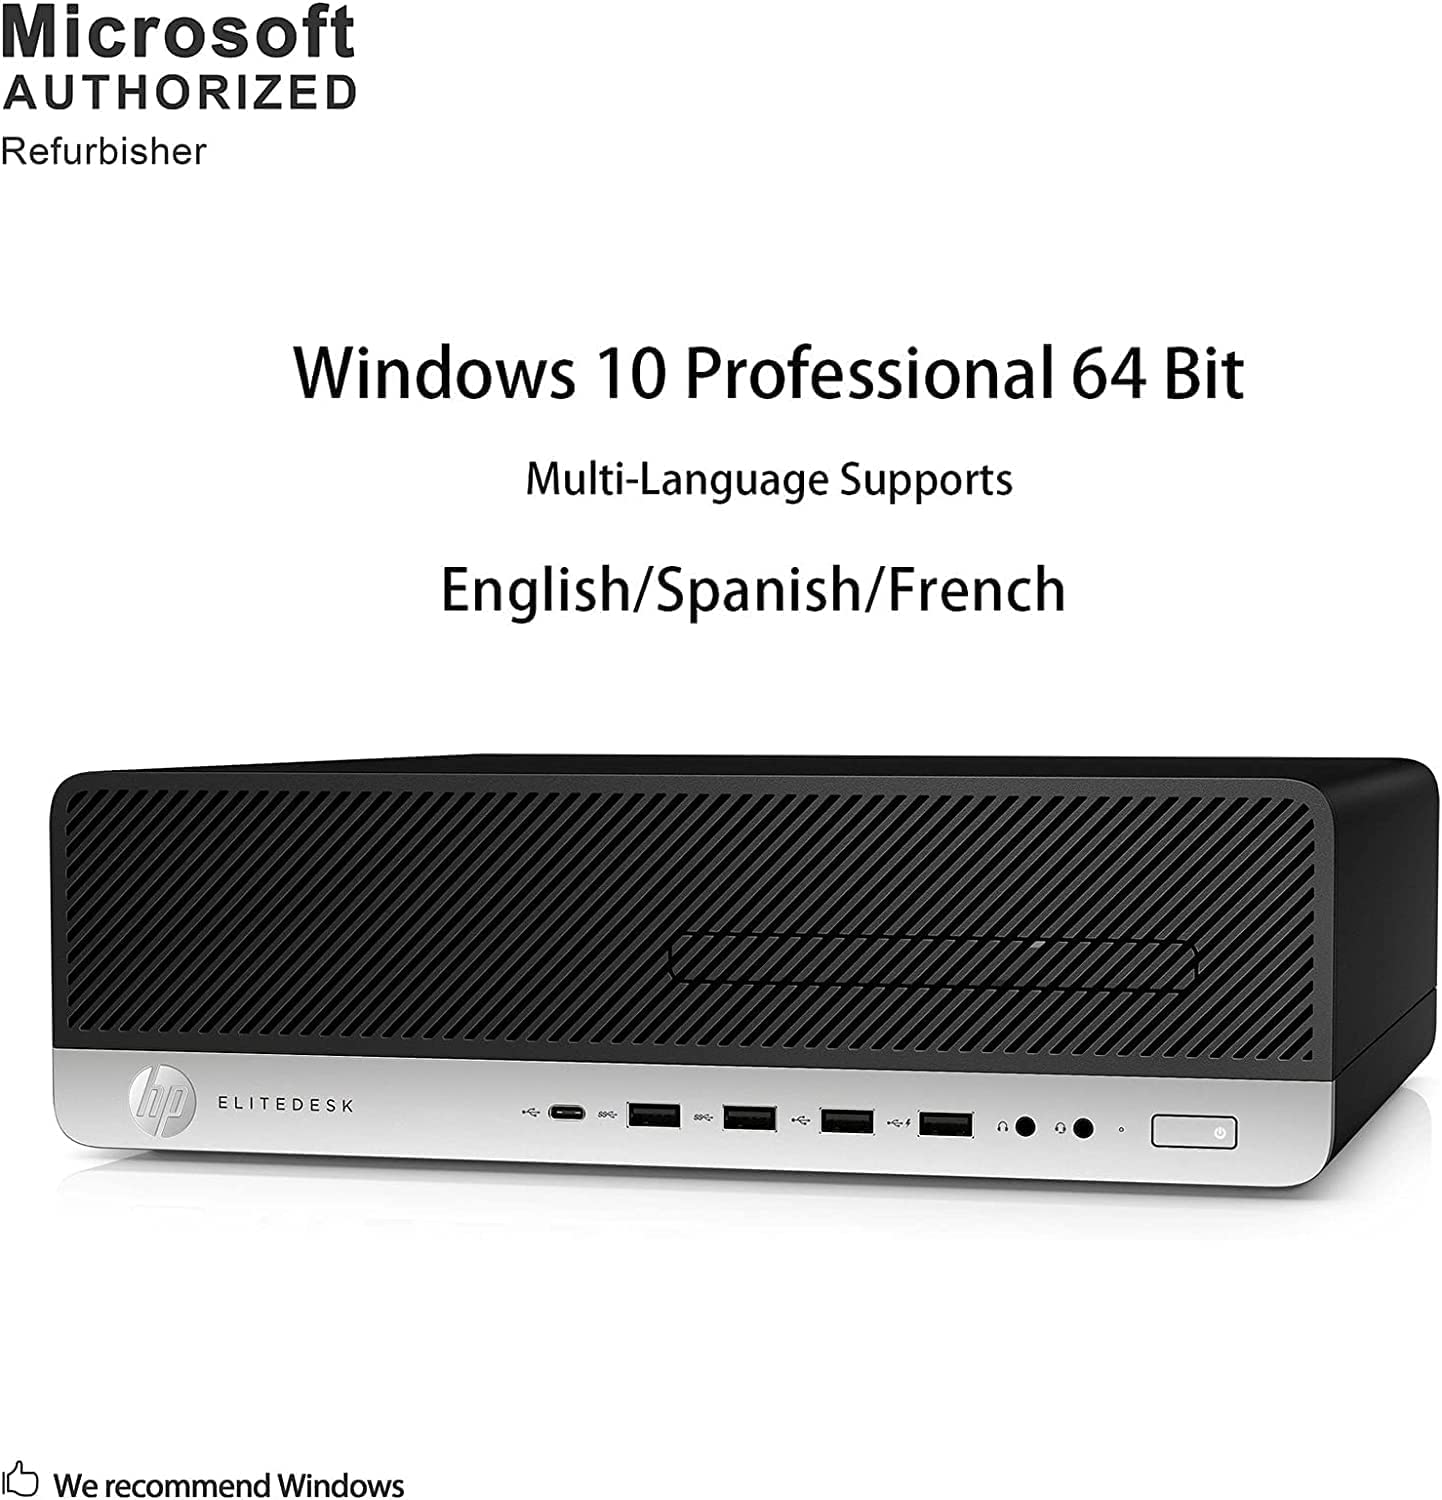 HP EliteDesk 800 G3 SFF PC (RGB), Intel Core i7-7700 up to 4.0 GHz, 32GB DDR4, 1TB SSD, 500GB HDD, WiFi, DVD, Bluetooth, Windows 10 Pro 64 Bit(Renewed), Black